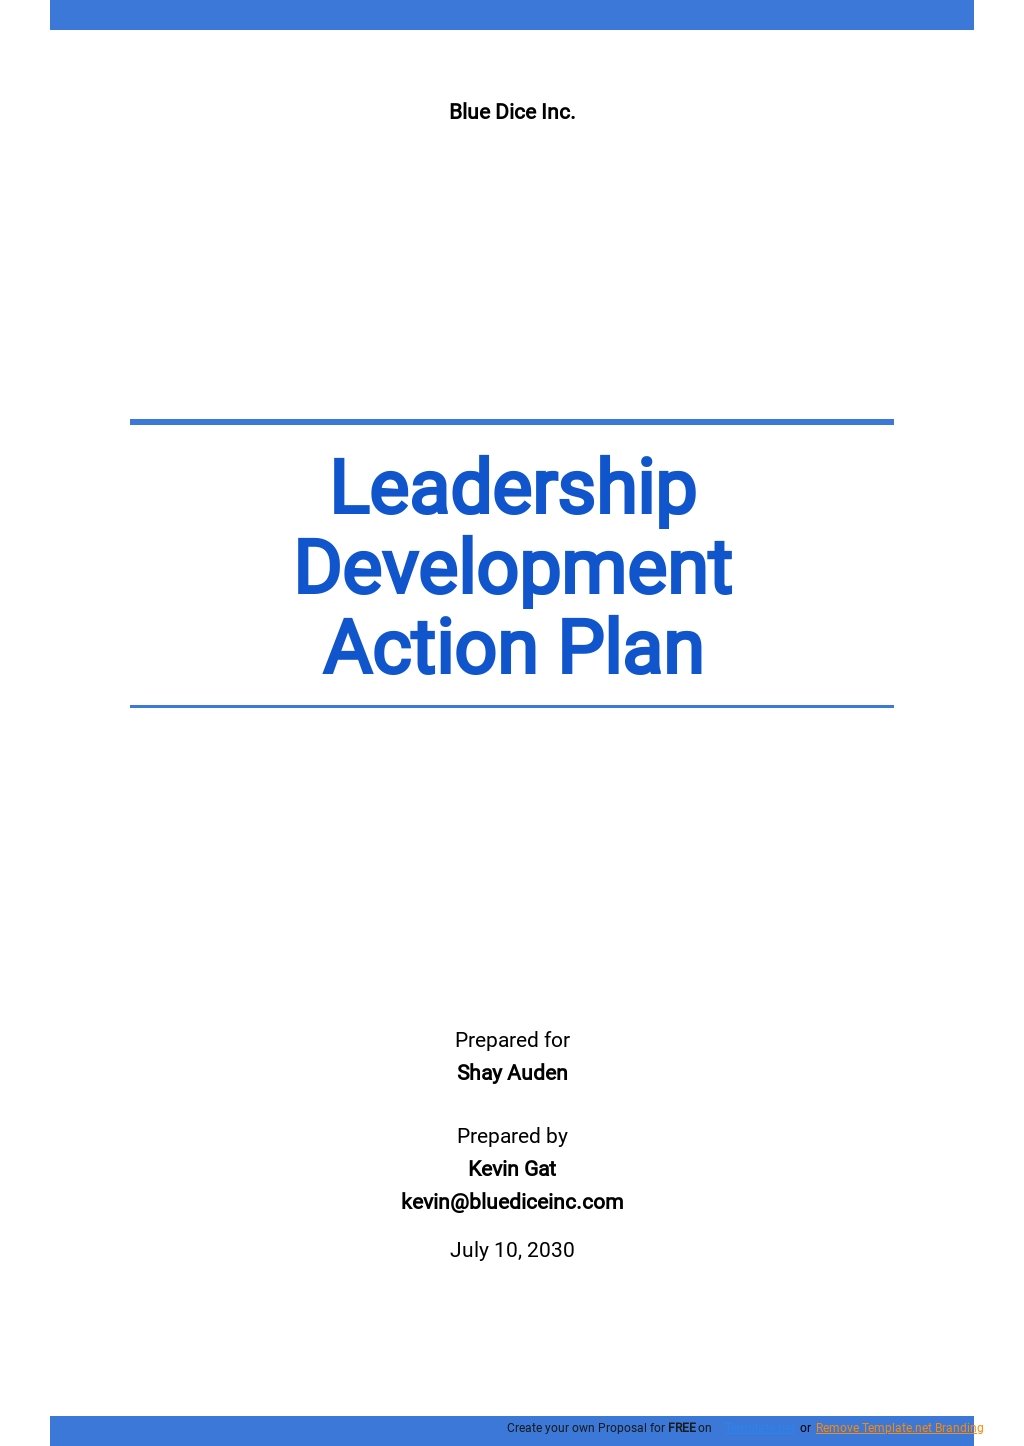 Leadership Development Action Plan Template